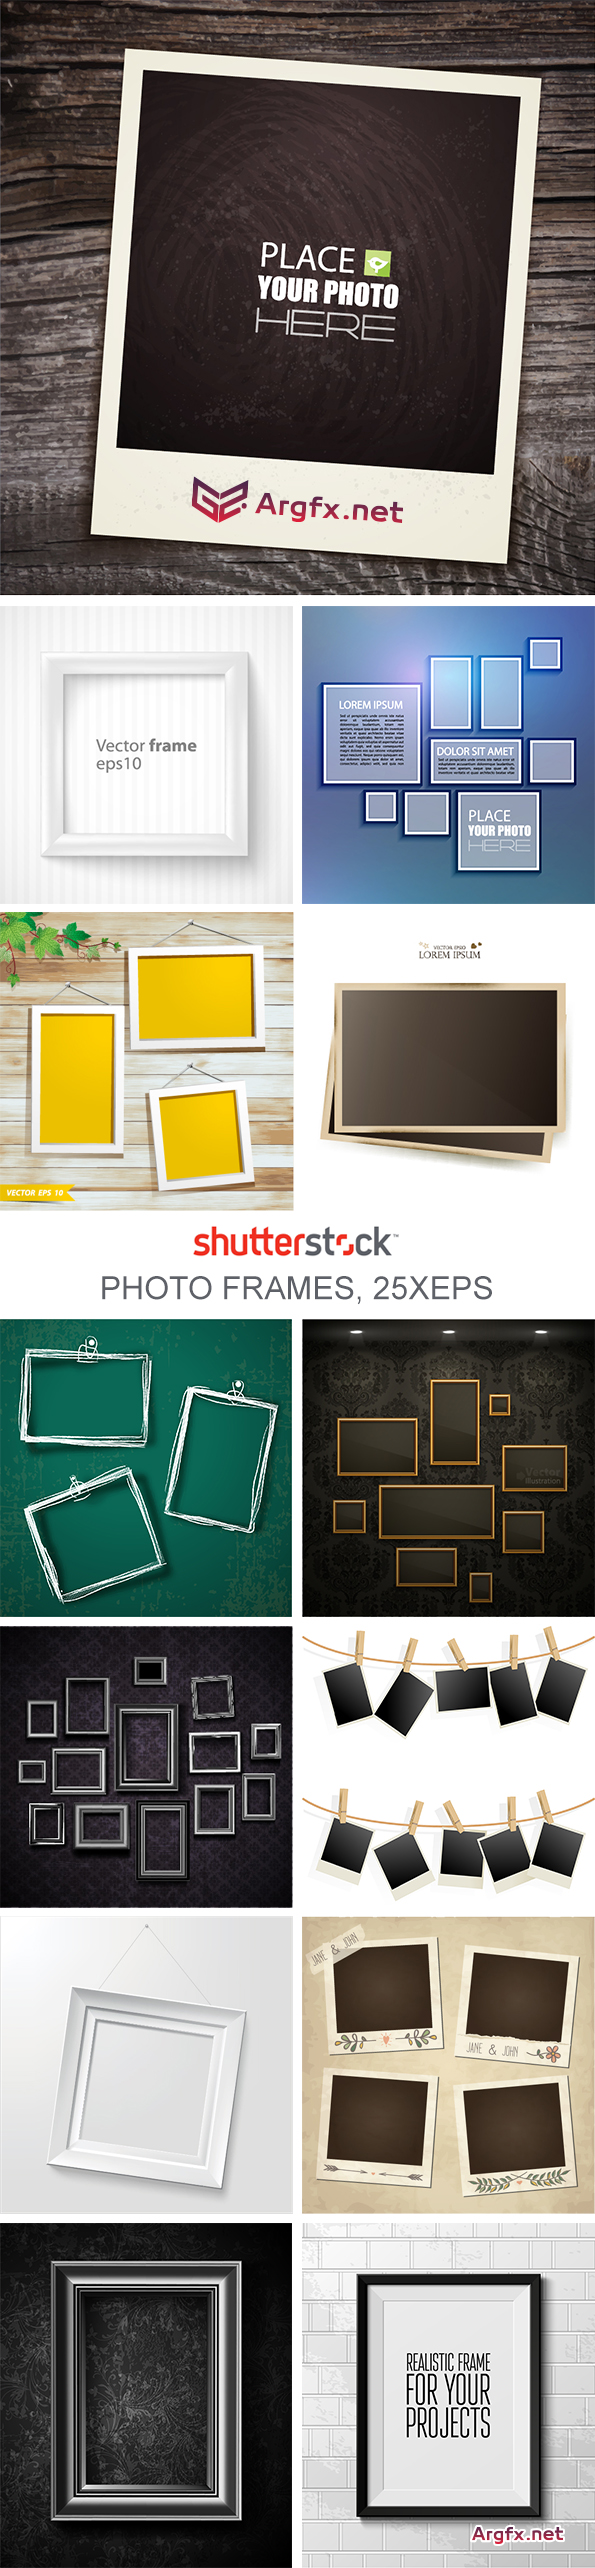 Amazing SS - Photo Frames, 25xEPS